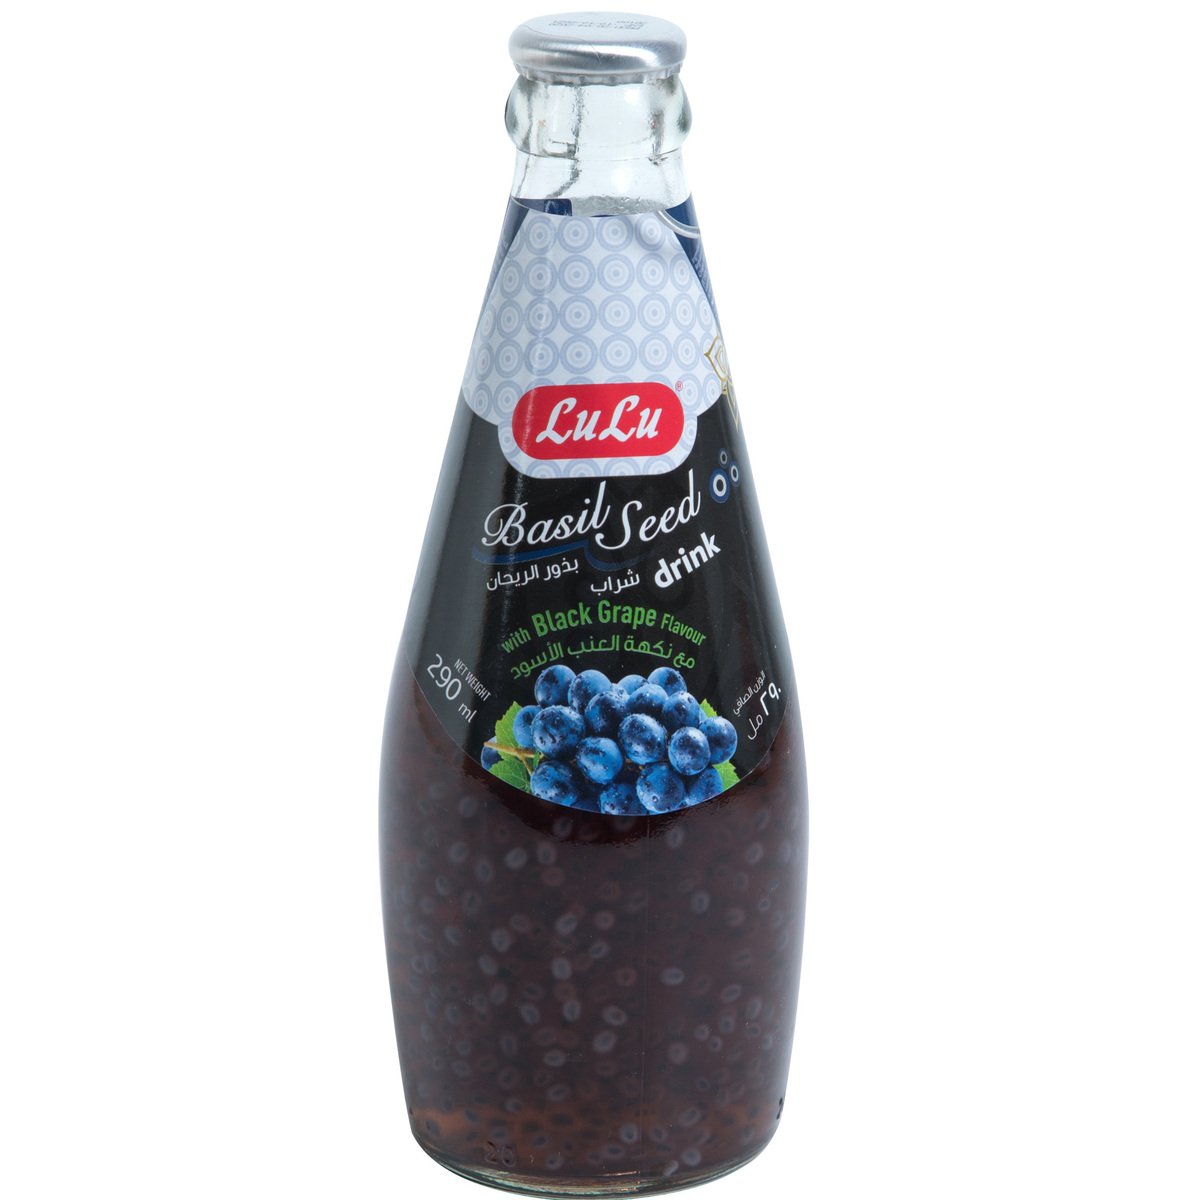 LuLu Basil Seed Drink Black Grape 290 ml